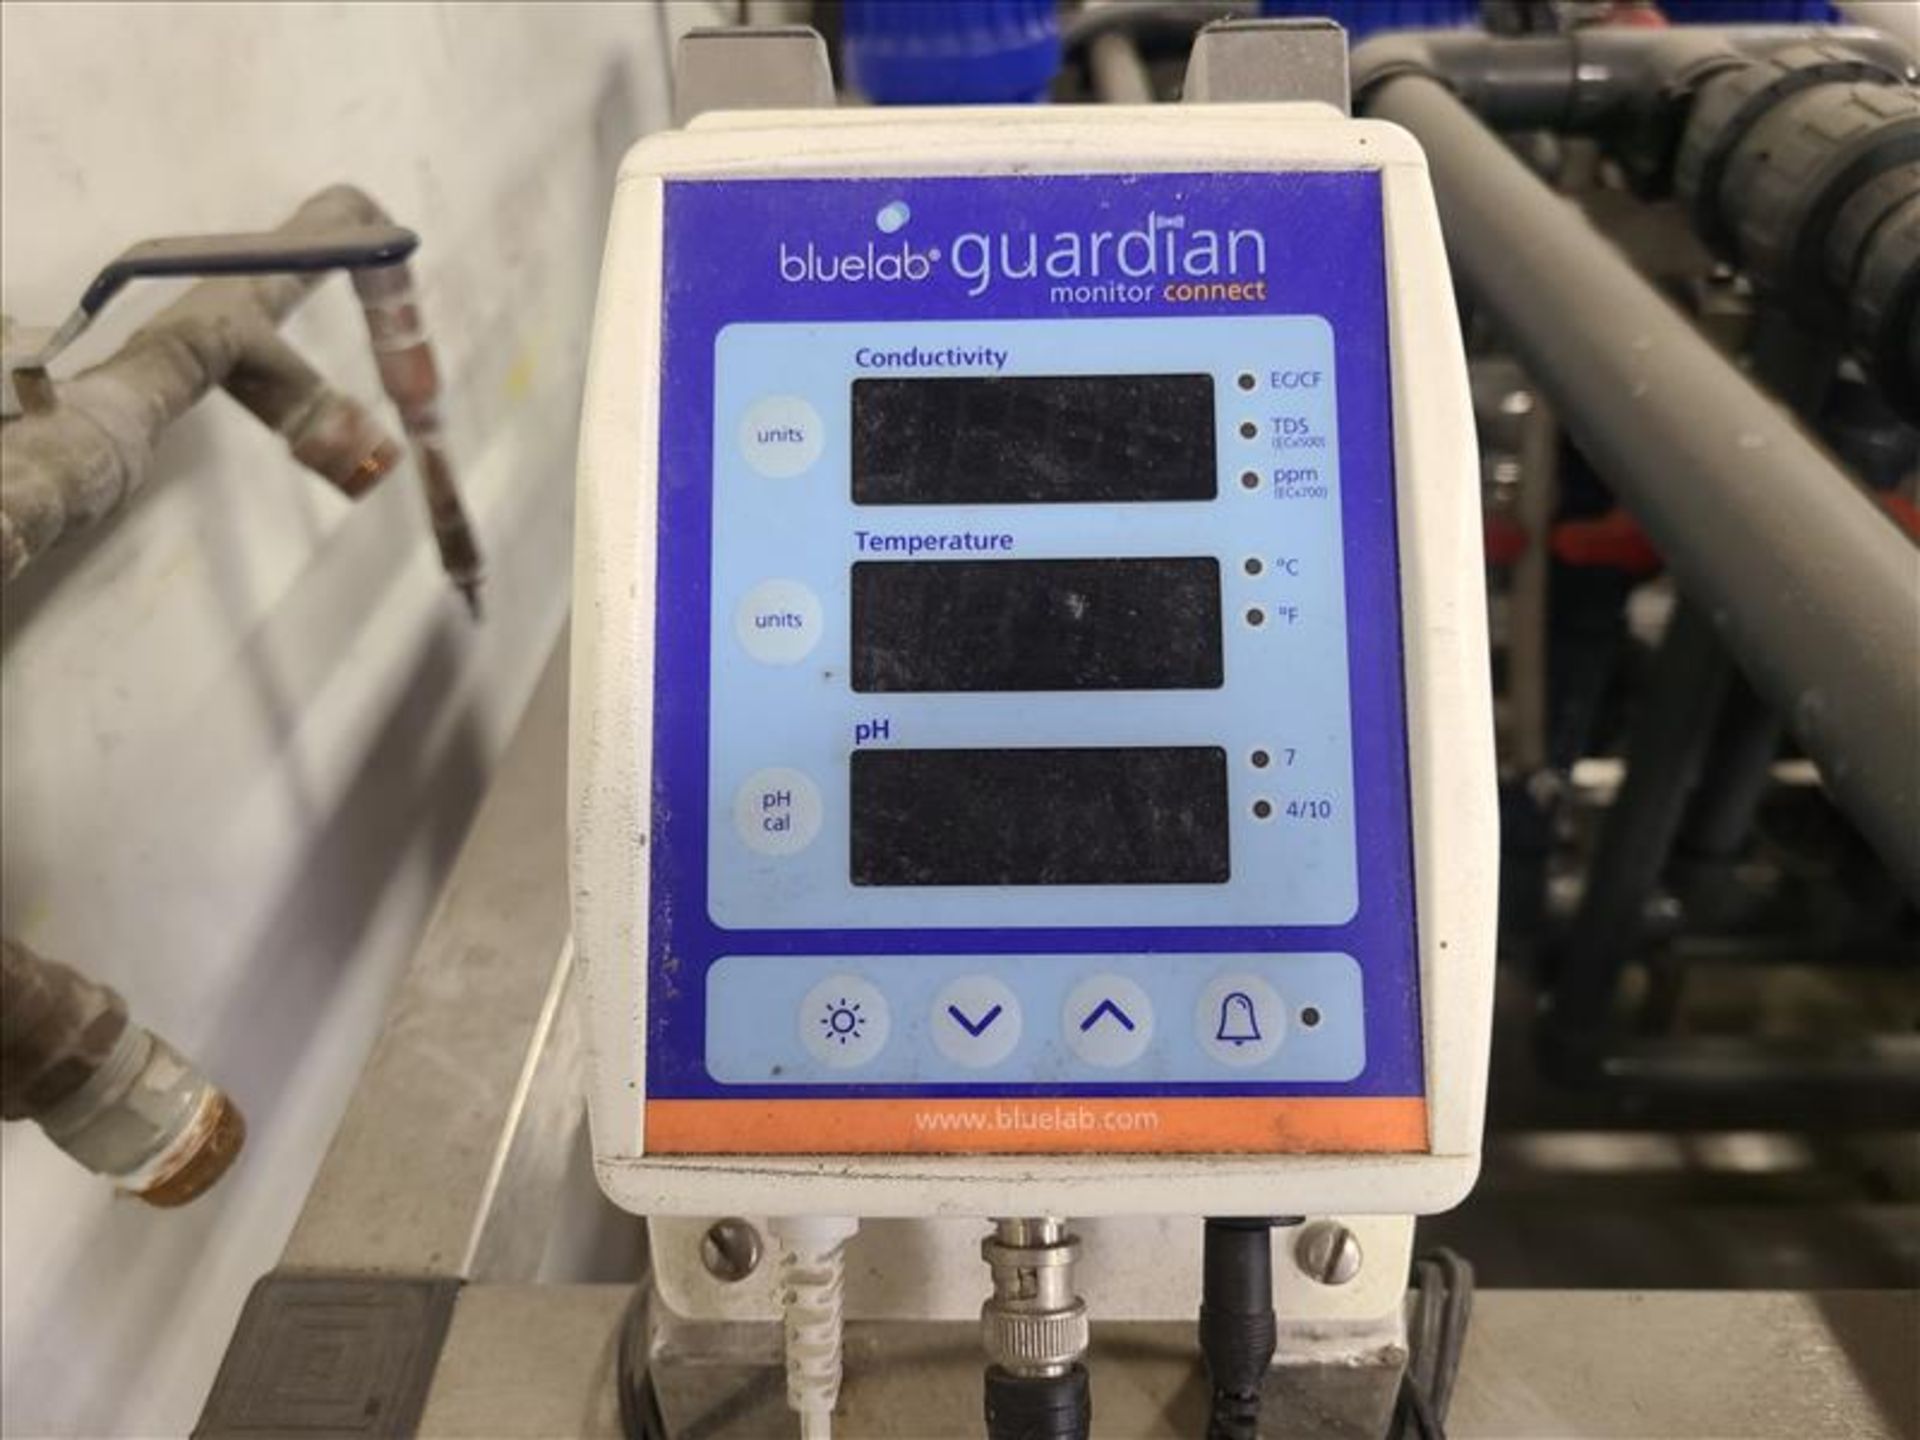 Zwarts/Dosatran 7-filter greenhouse dosing system w/ BlueLab Guardian monitor connect - Image 3 of 6